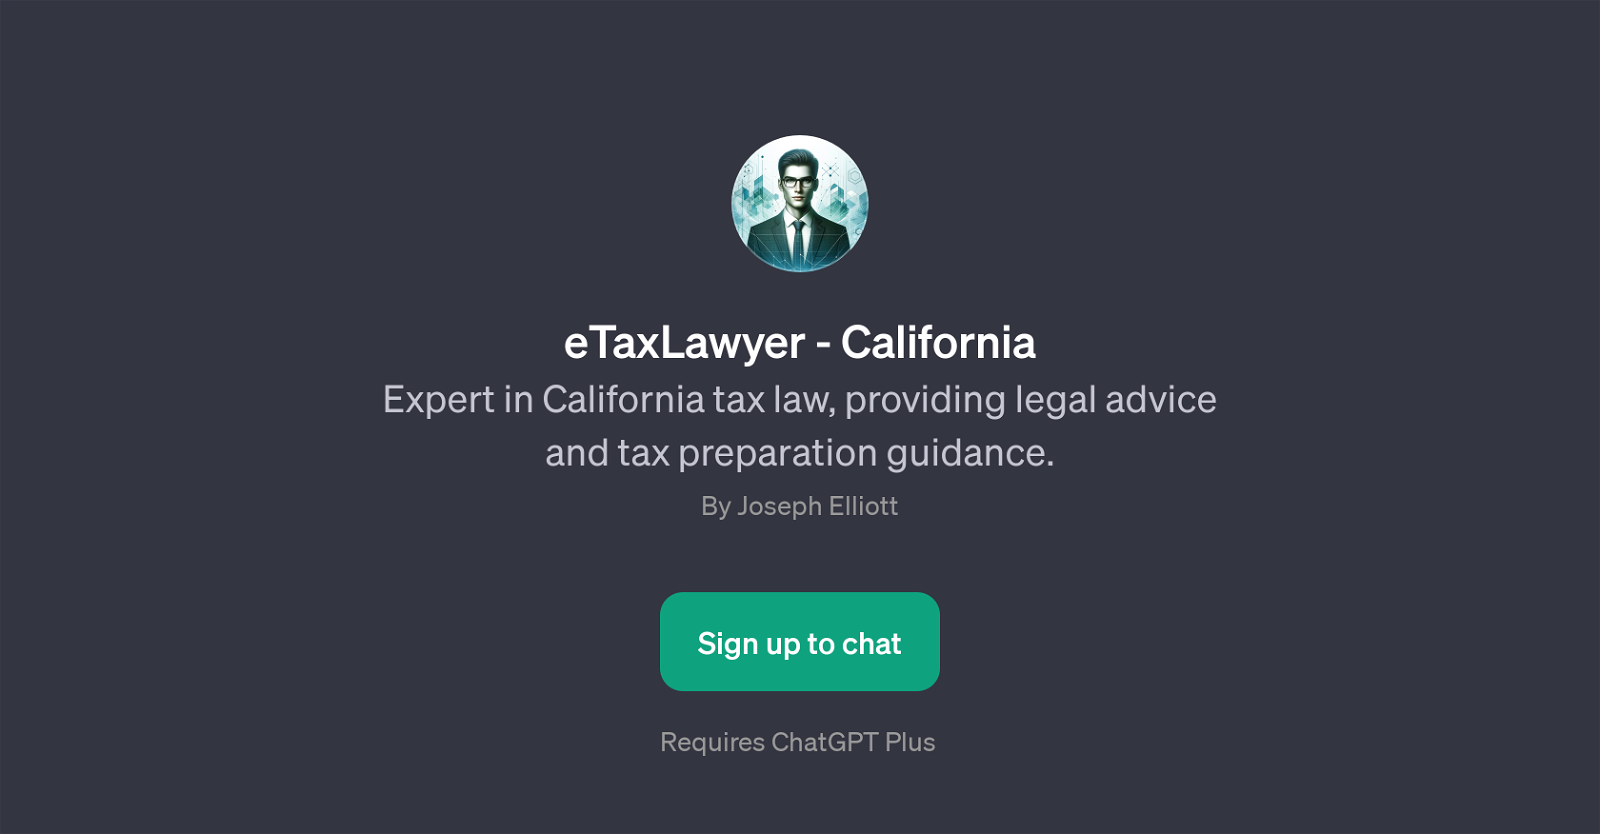 eTaxLawyer - California website